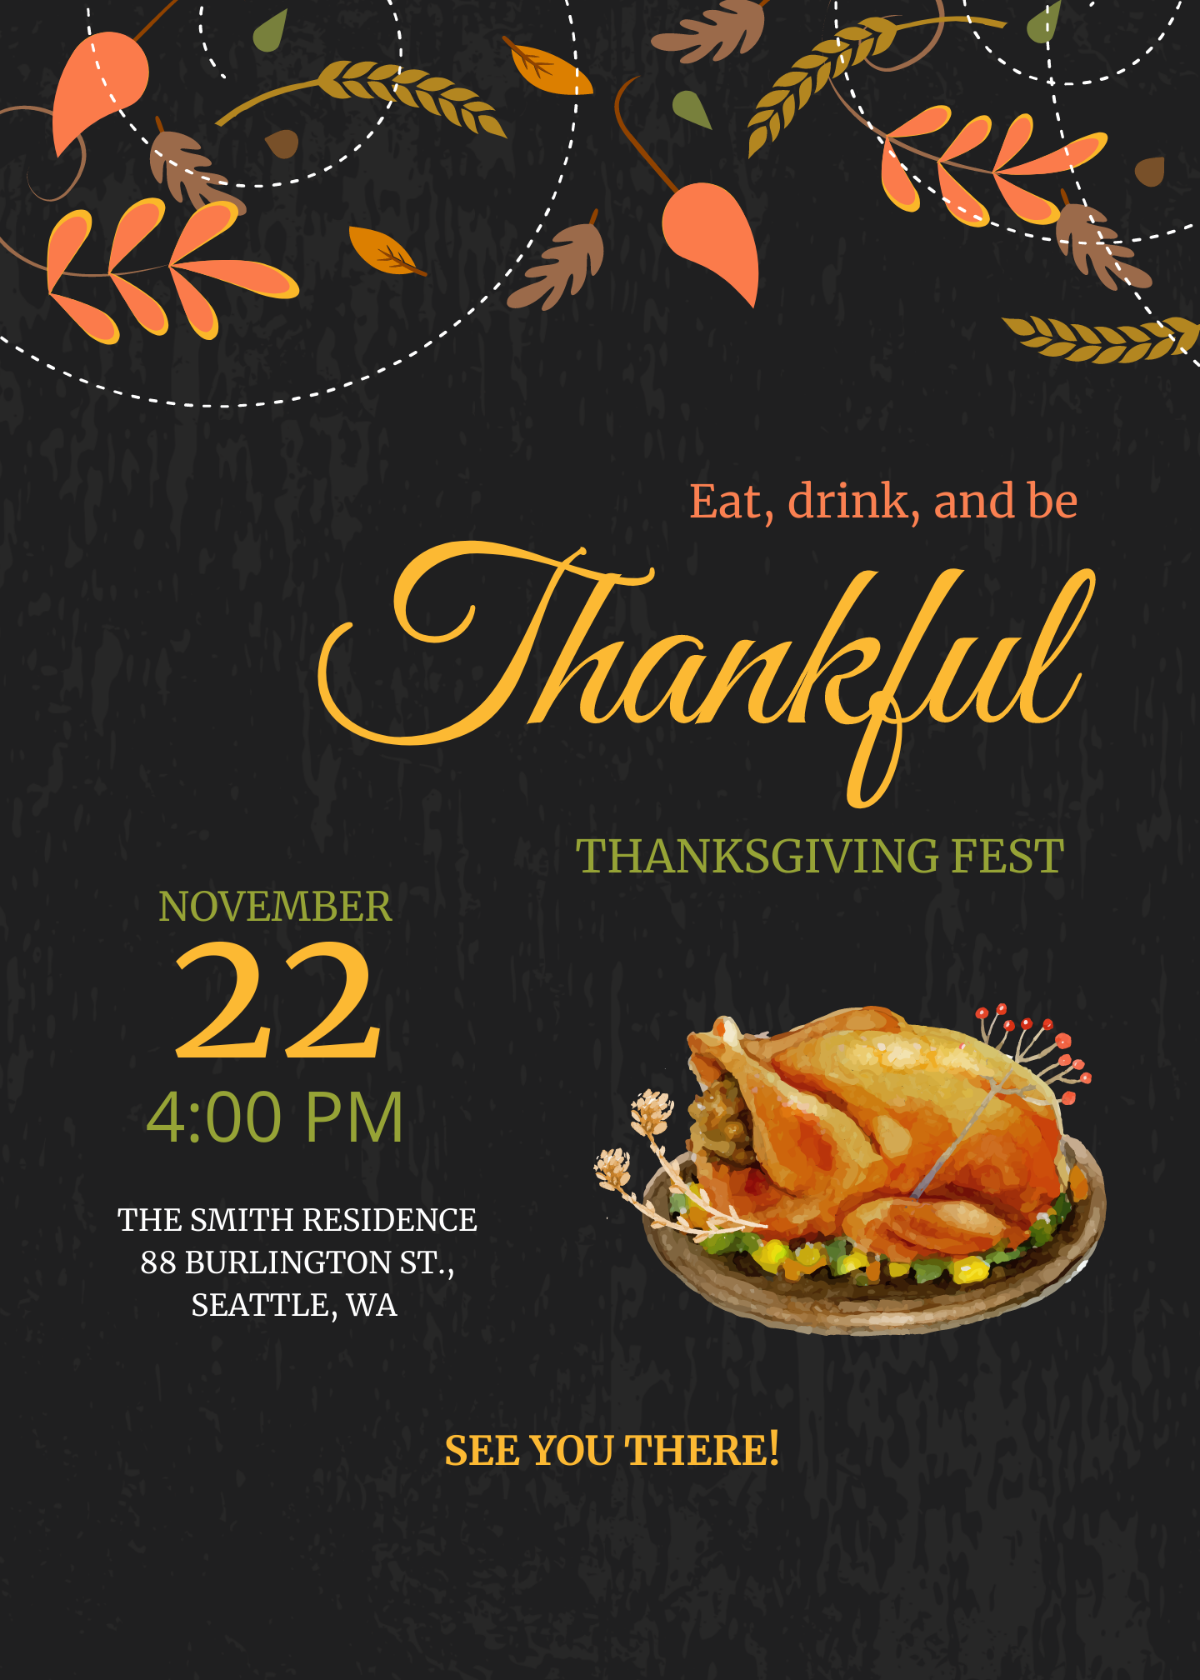 Annual Thanksgiving Fest Invitation Template